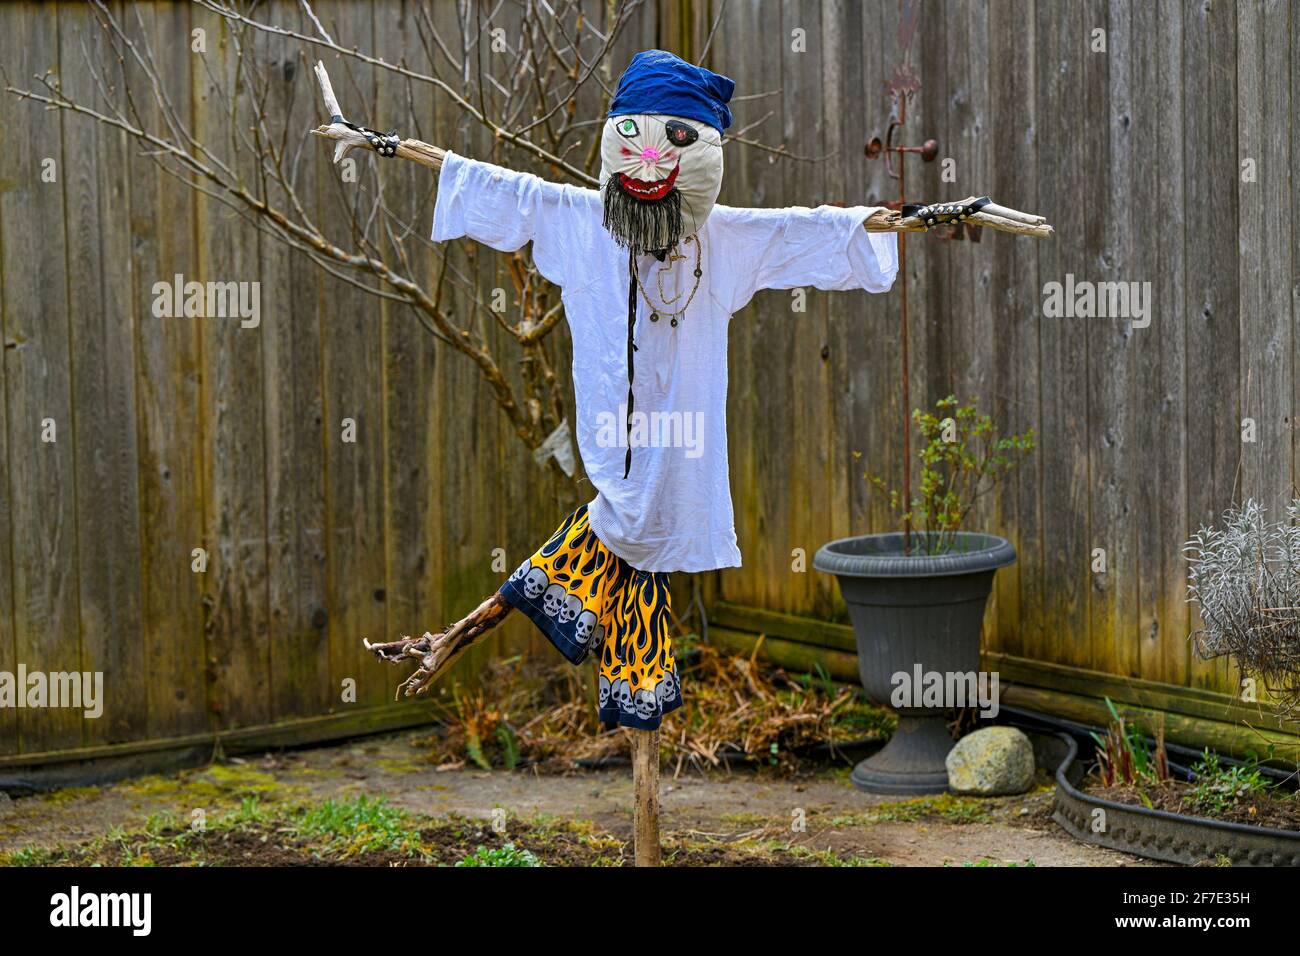 Pirate Scarecrow Stock Photo